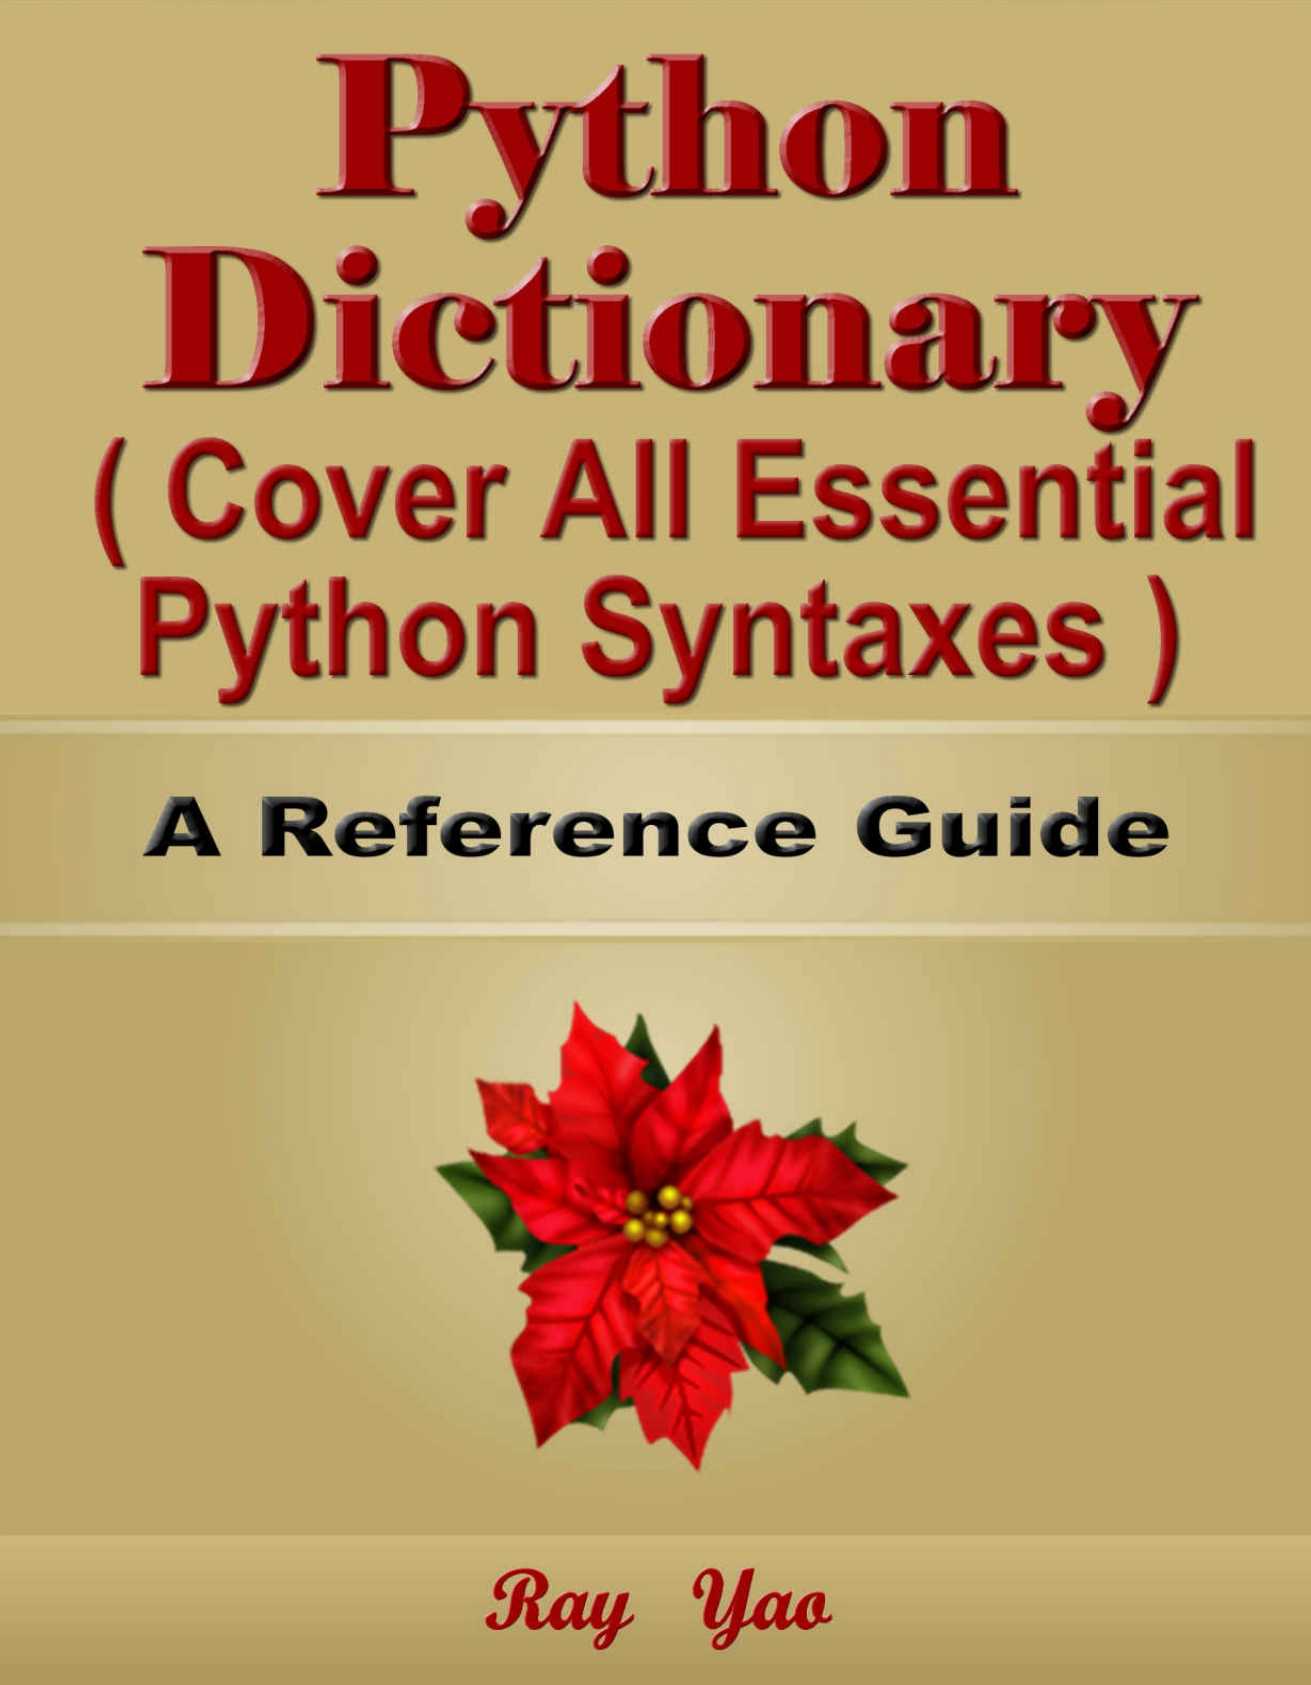 Python: Python Dictionary, Cover All Essential Python Syntaxes: Python Coding Helper, Python Programming Tool, Python Reference Workbook